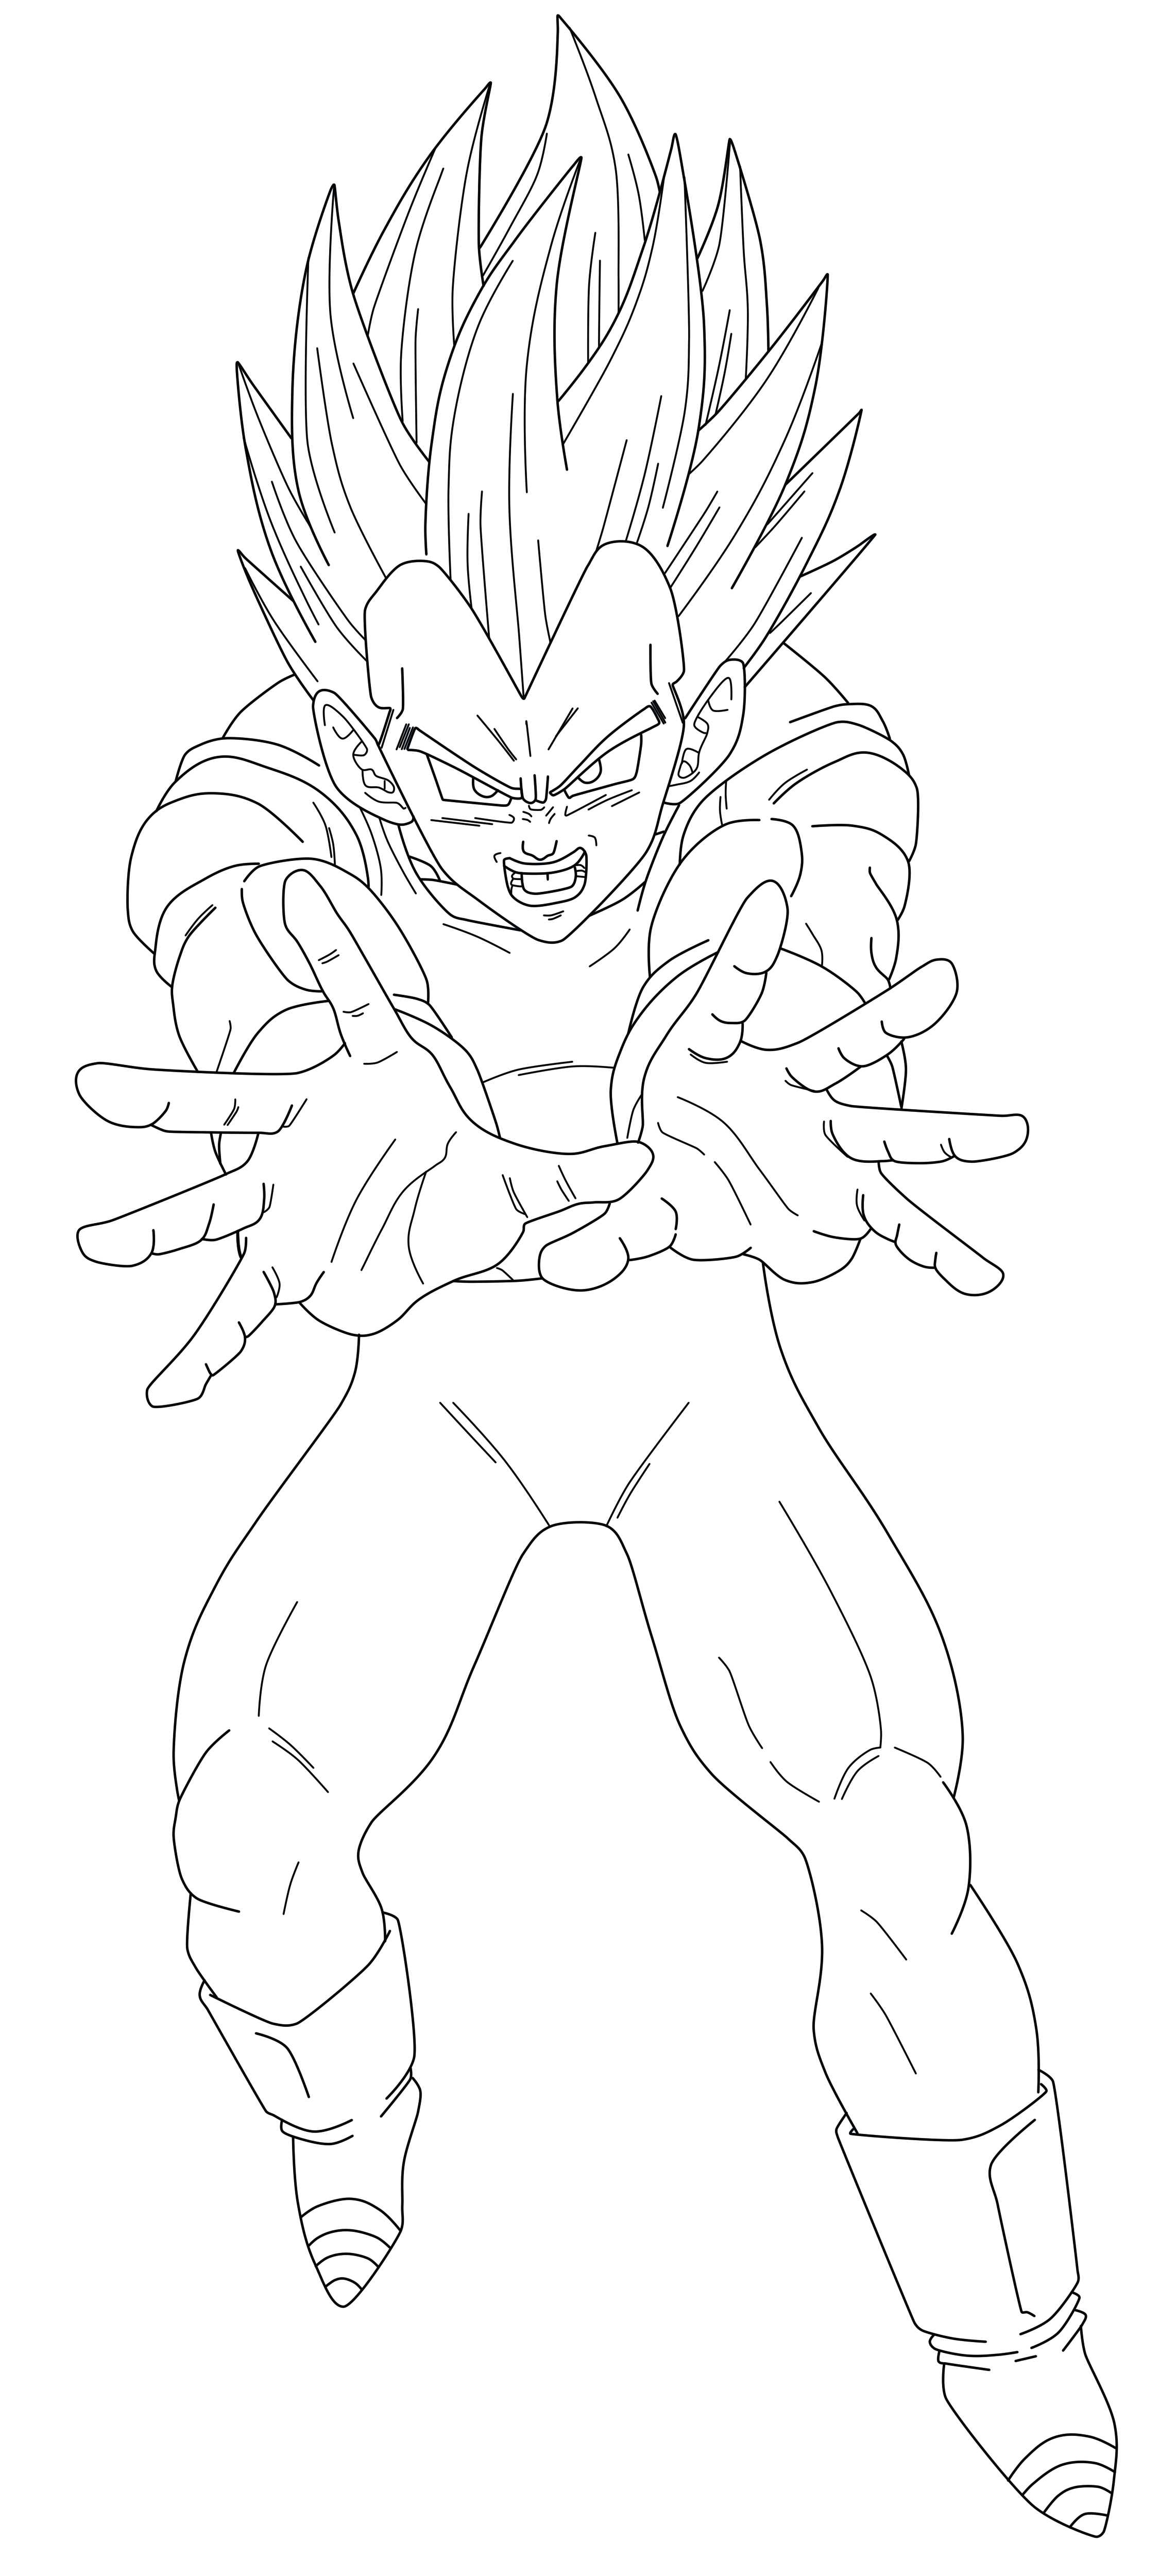 Goku Vs Majin Vegeta Coloring Pages - More information on ...